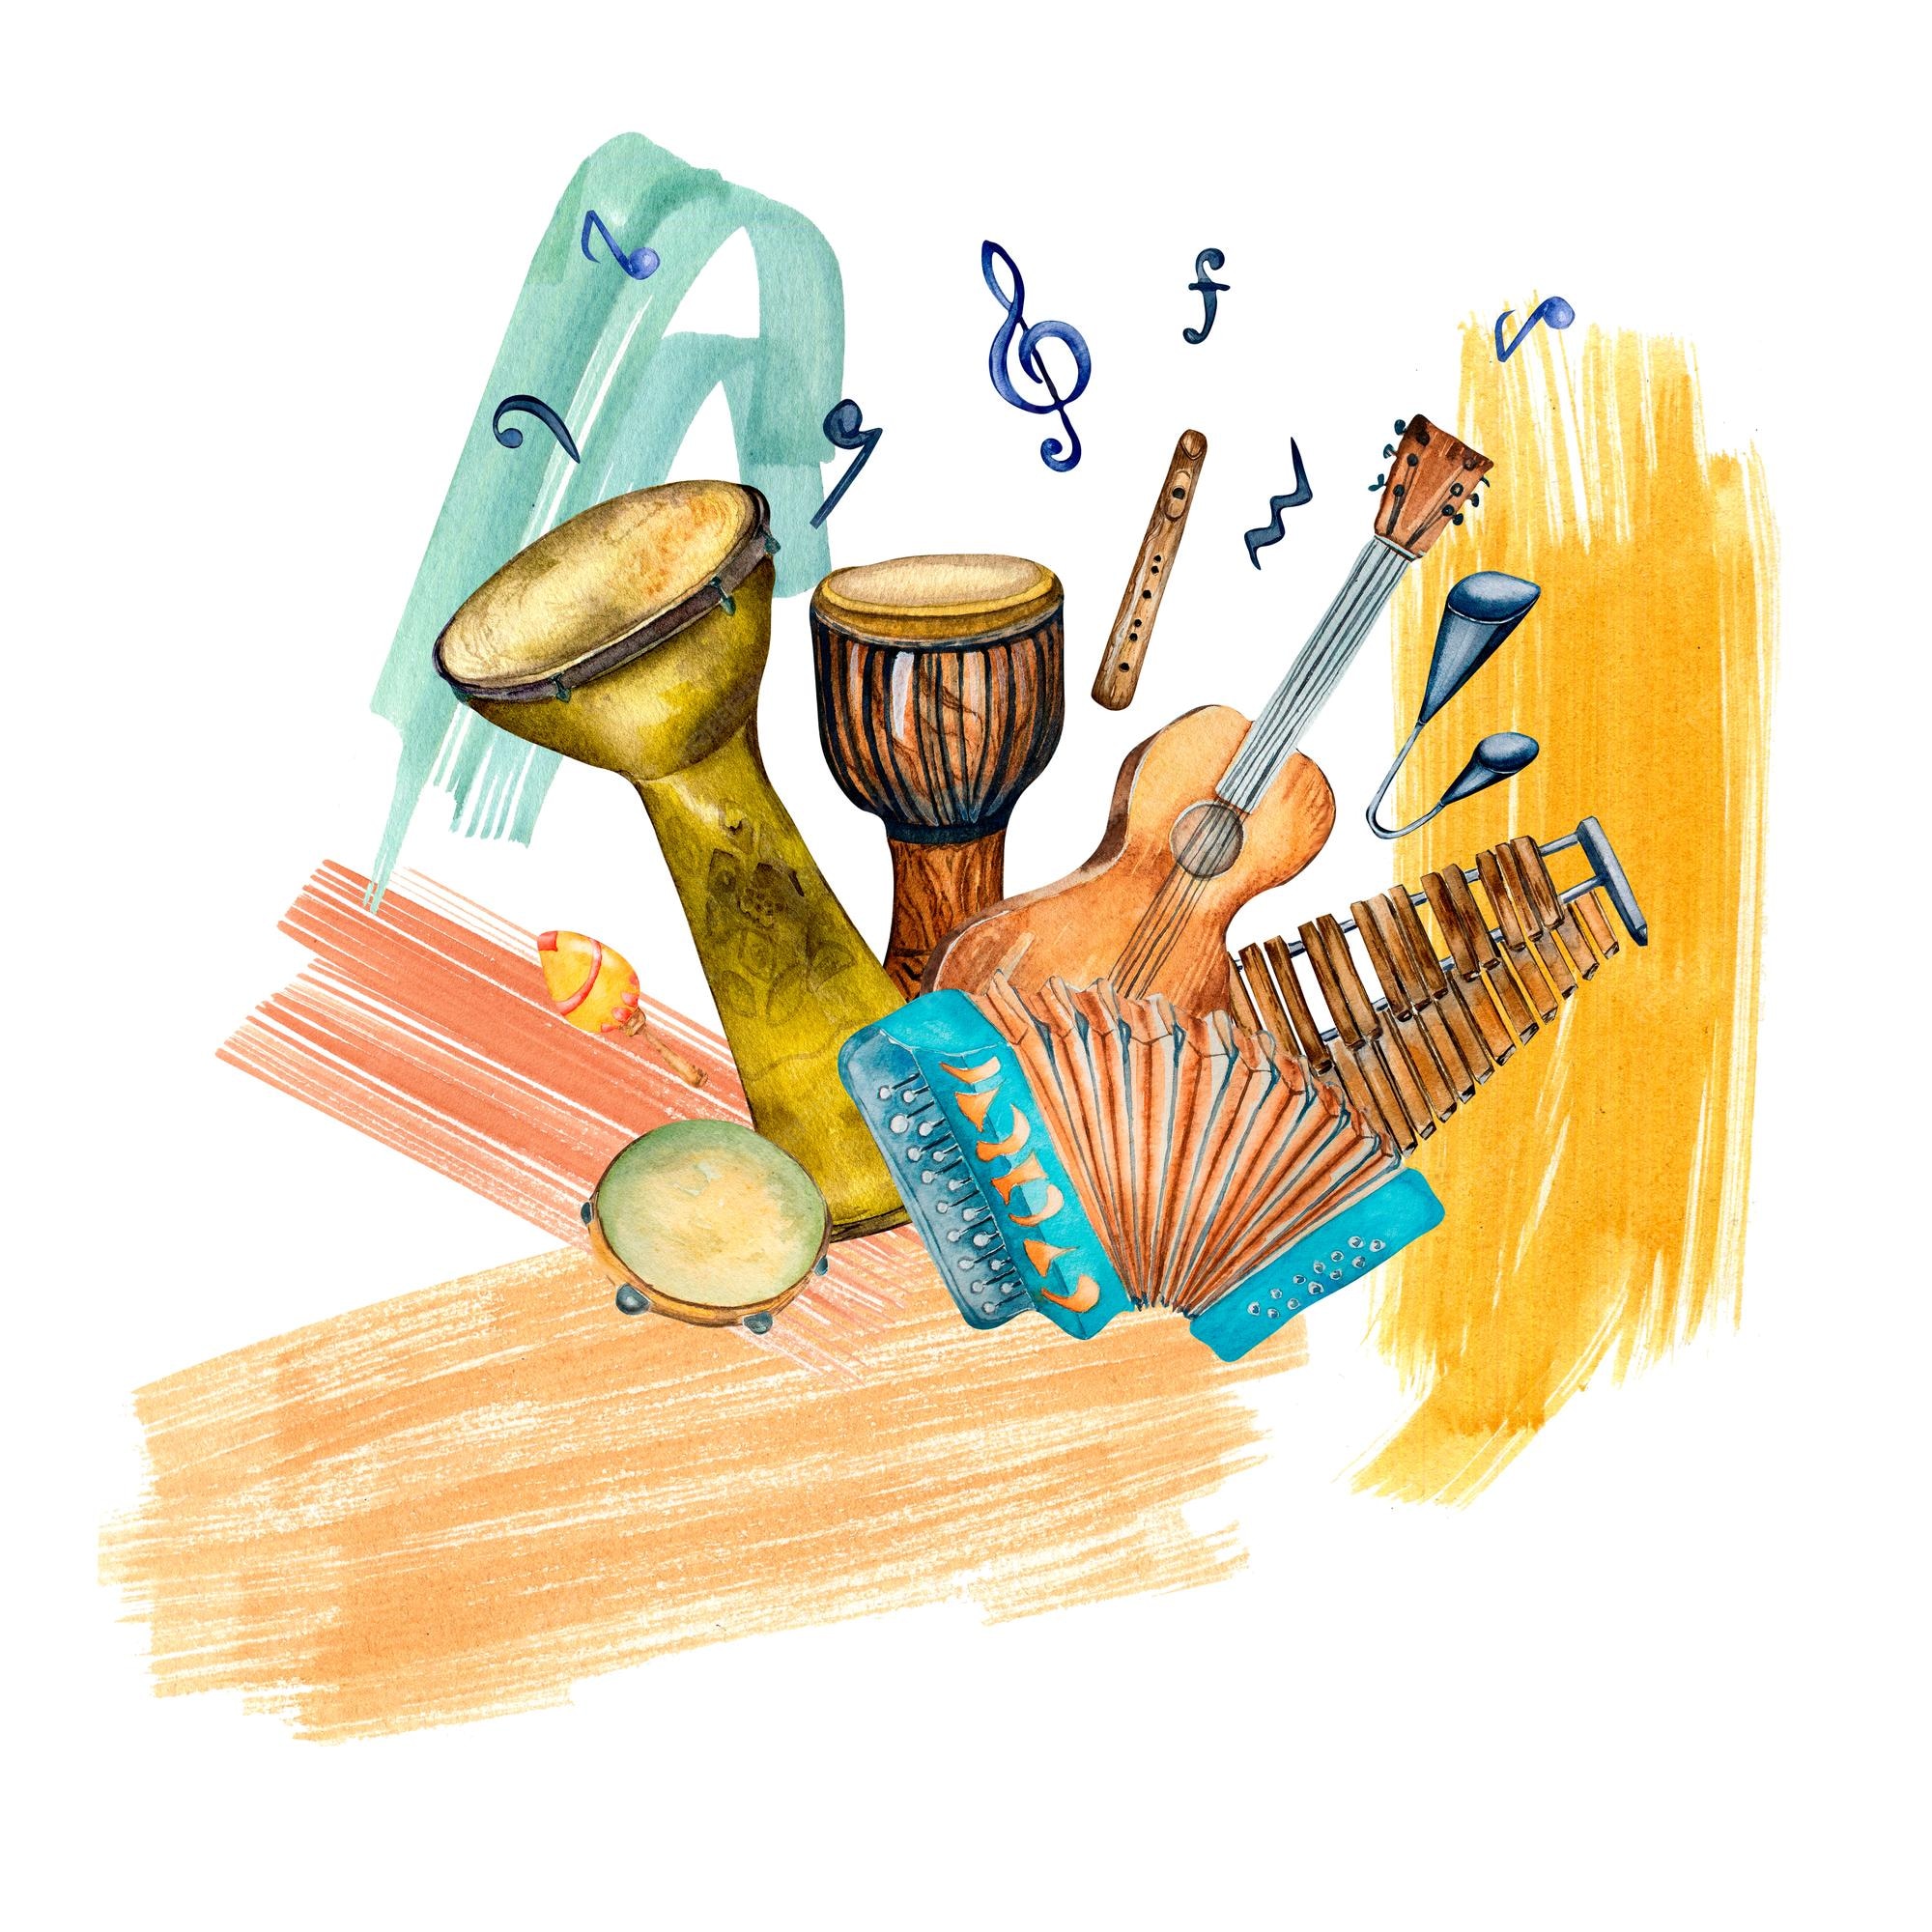 Mismo Tío o señor Vegetación Instrumentos musicales de percusión latina e ilustración de acuarela de  trazo de pintura aislado | Foto Premium